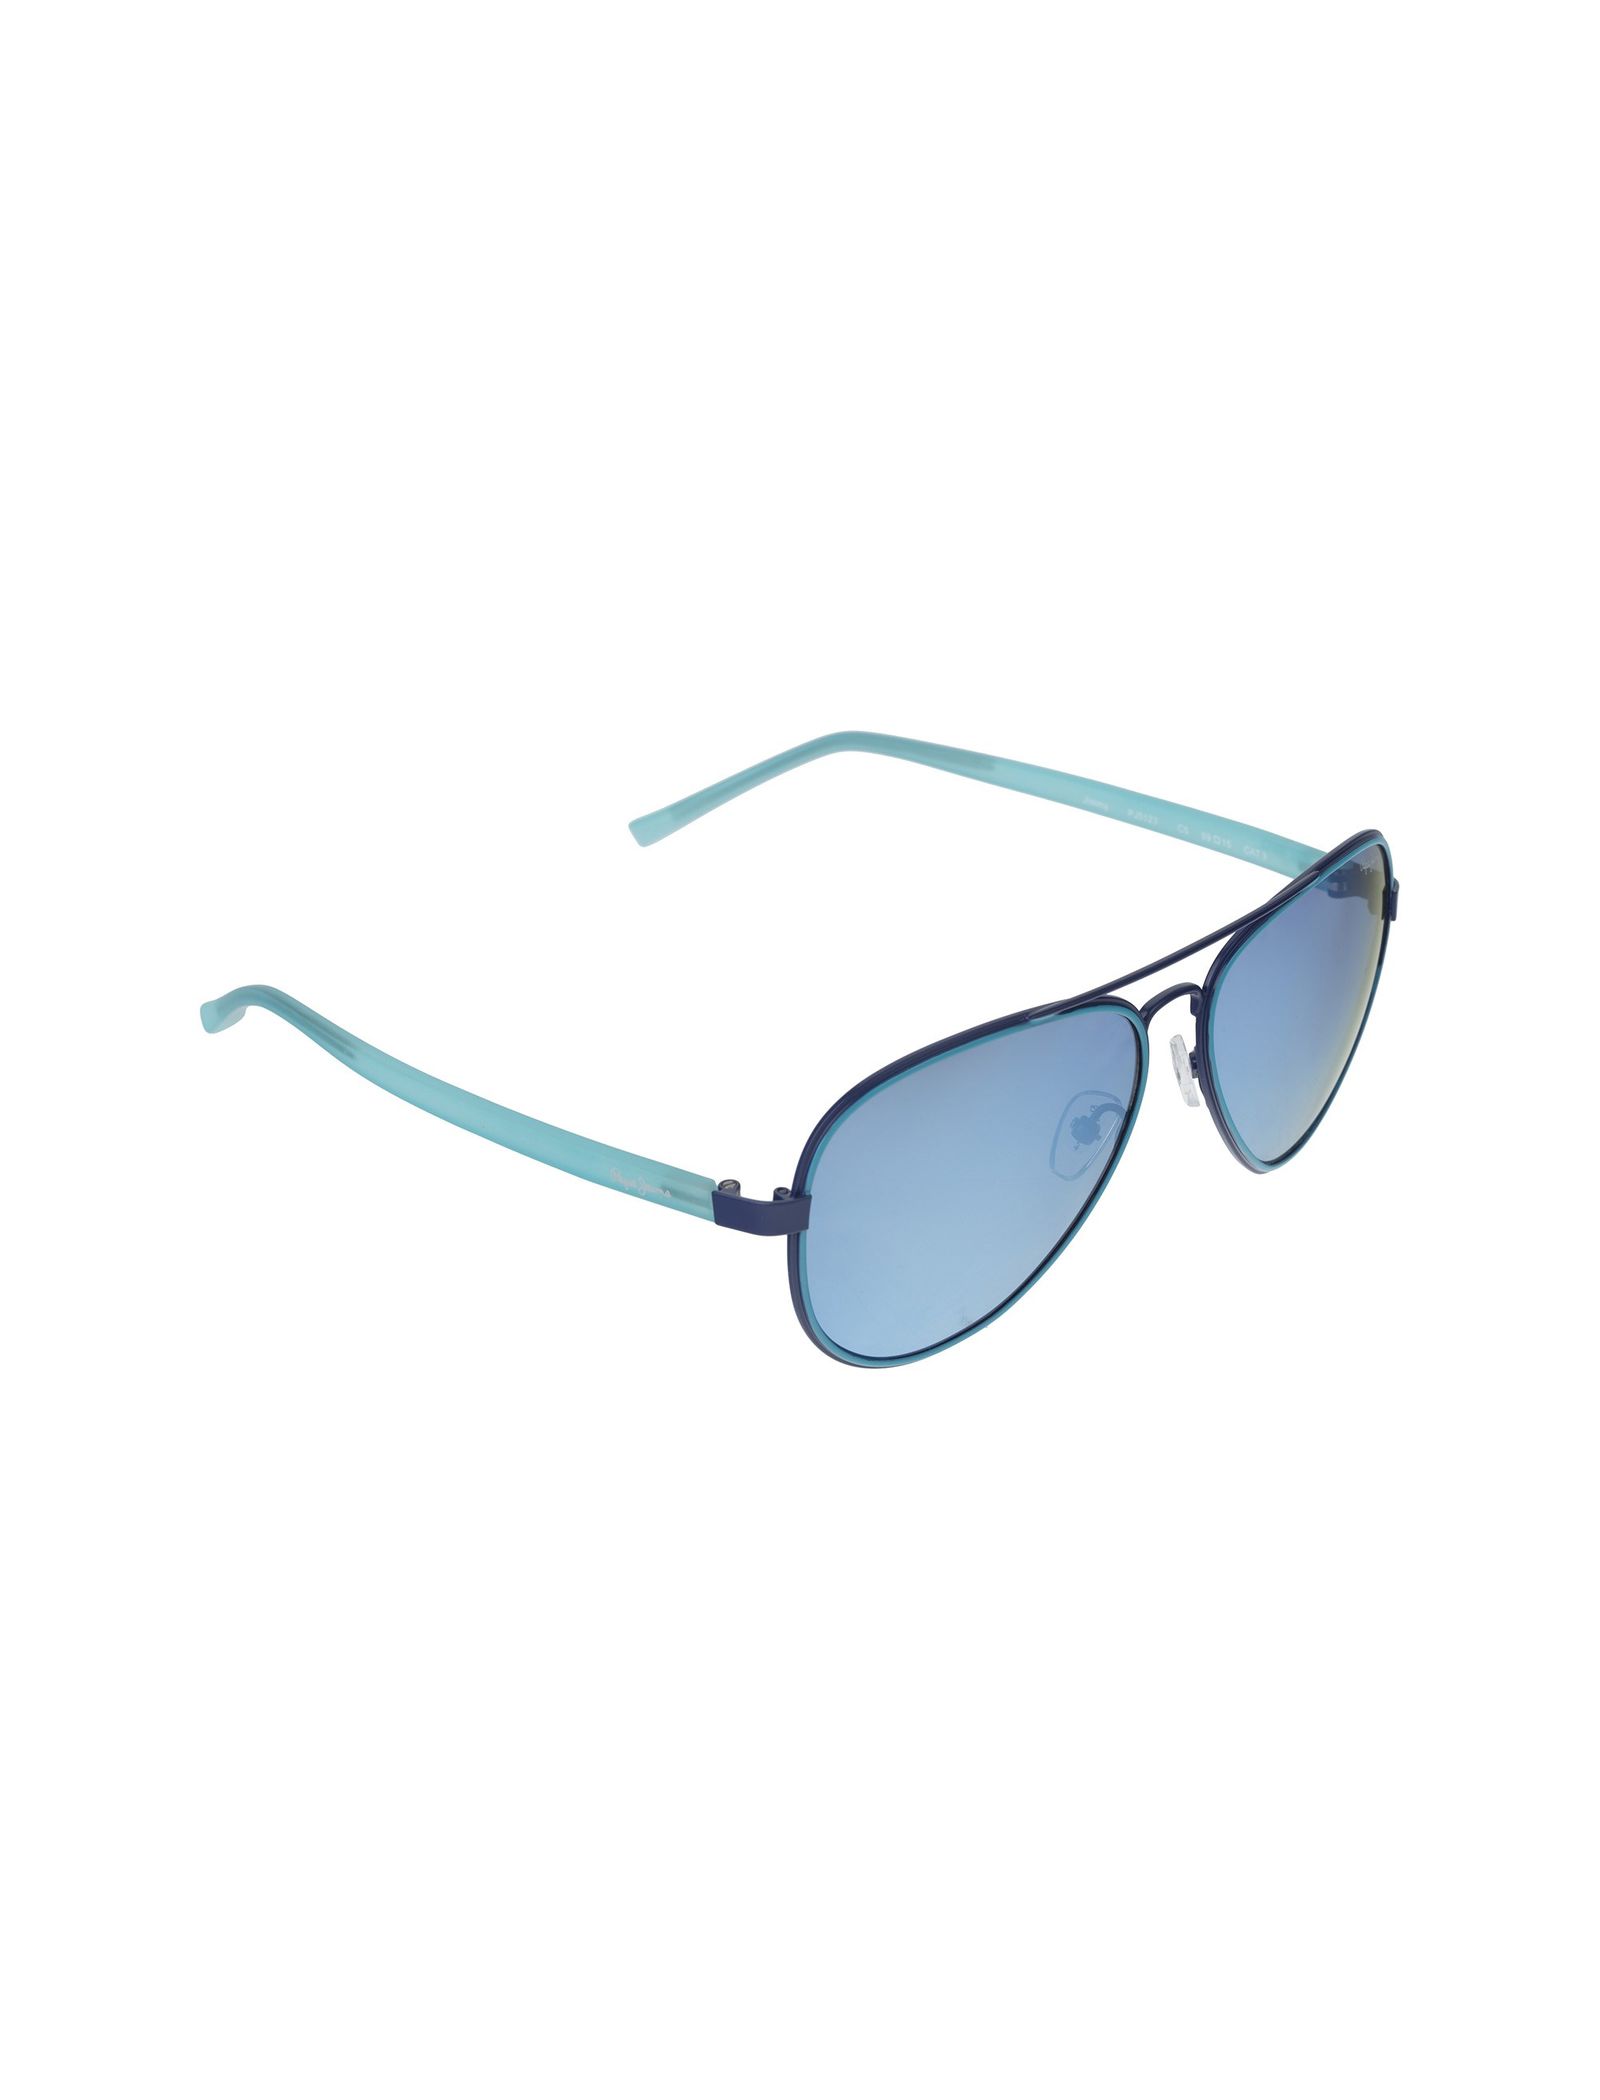 عینک آفتابی خلبانی زنانه - پپه جینز - آبي روشن - 3